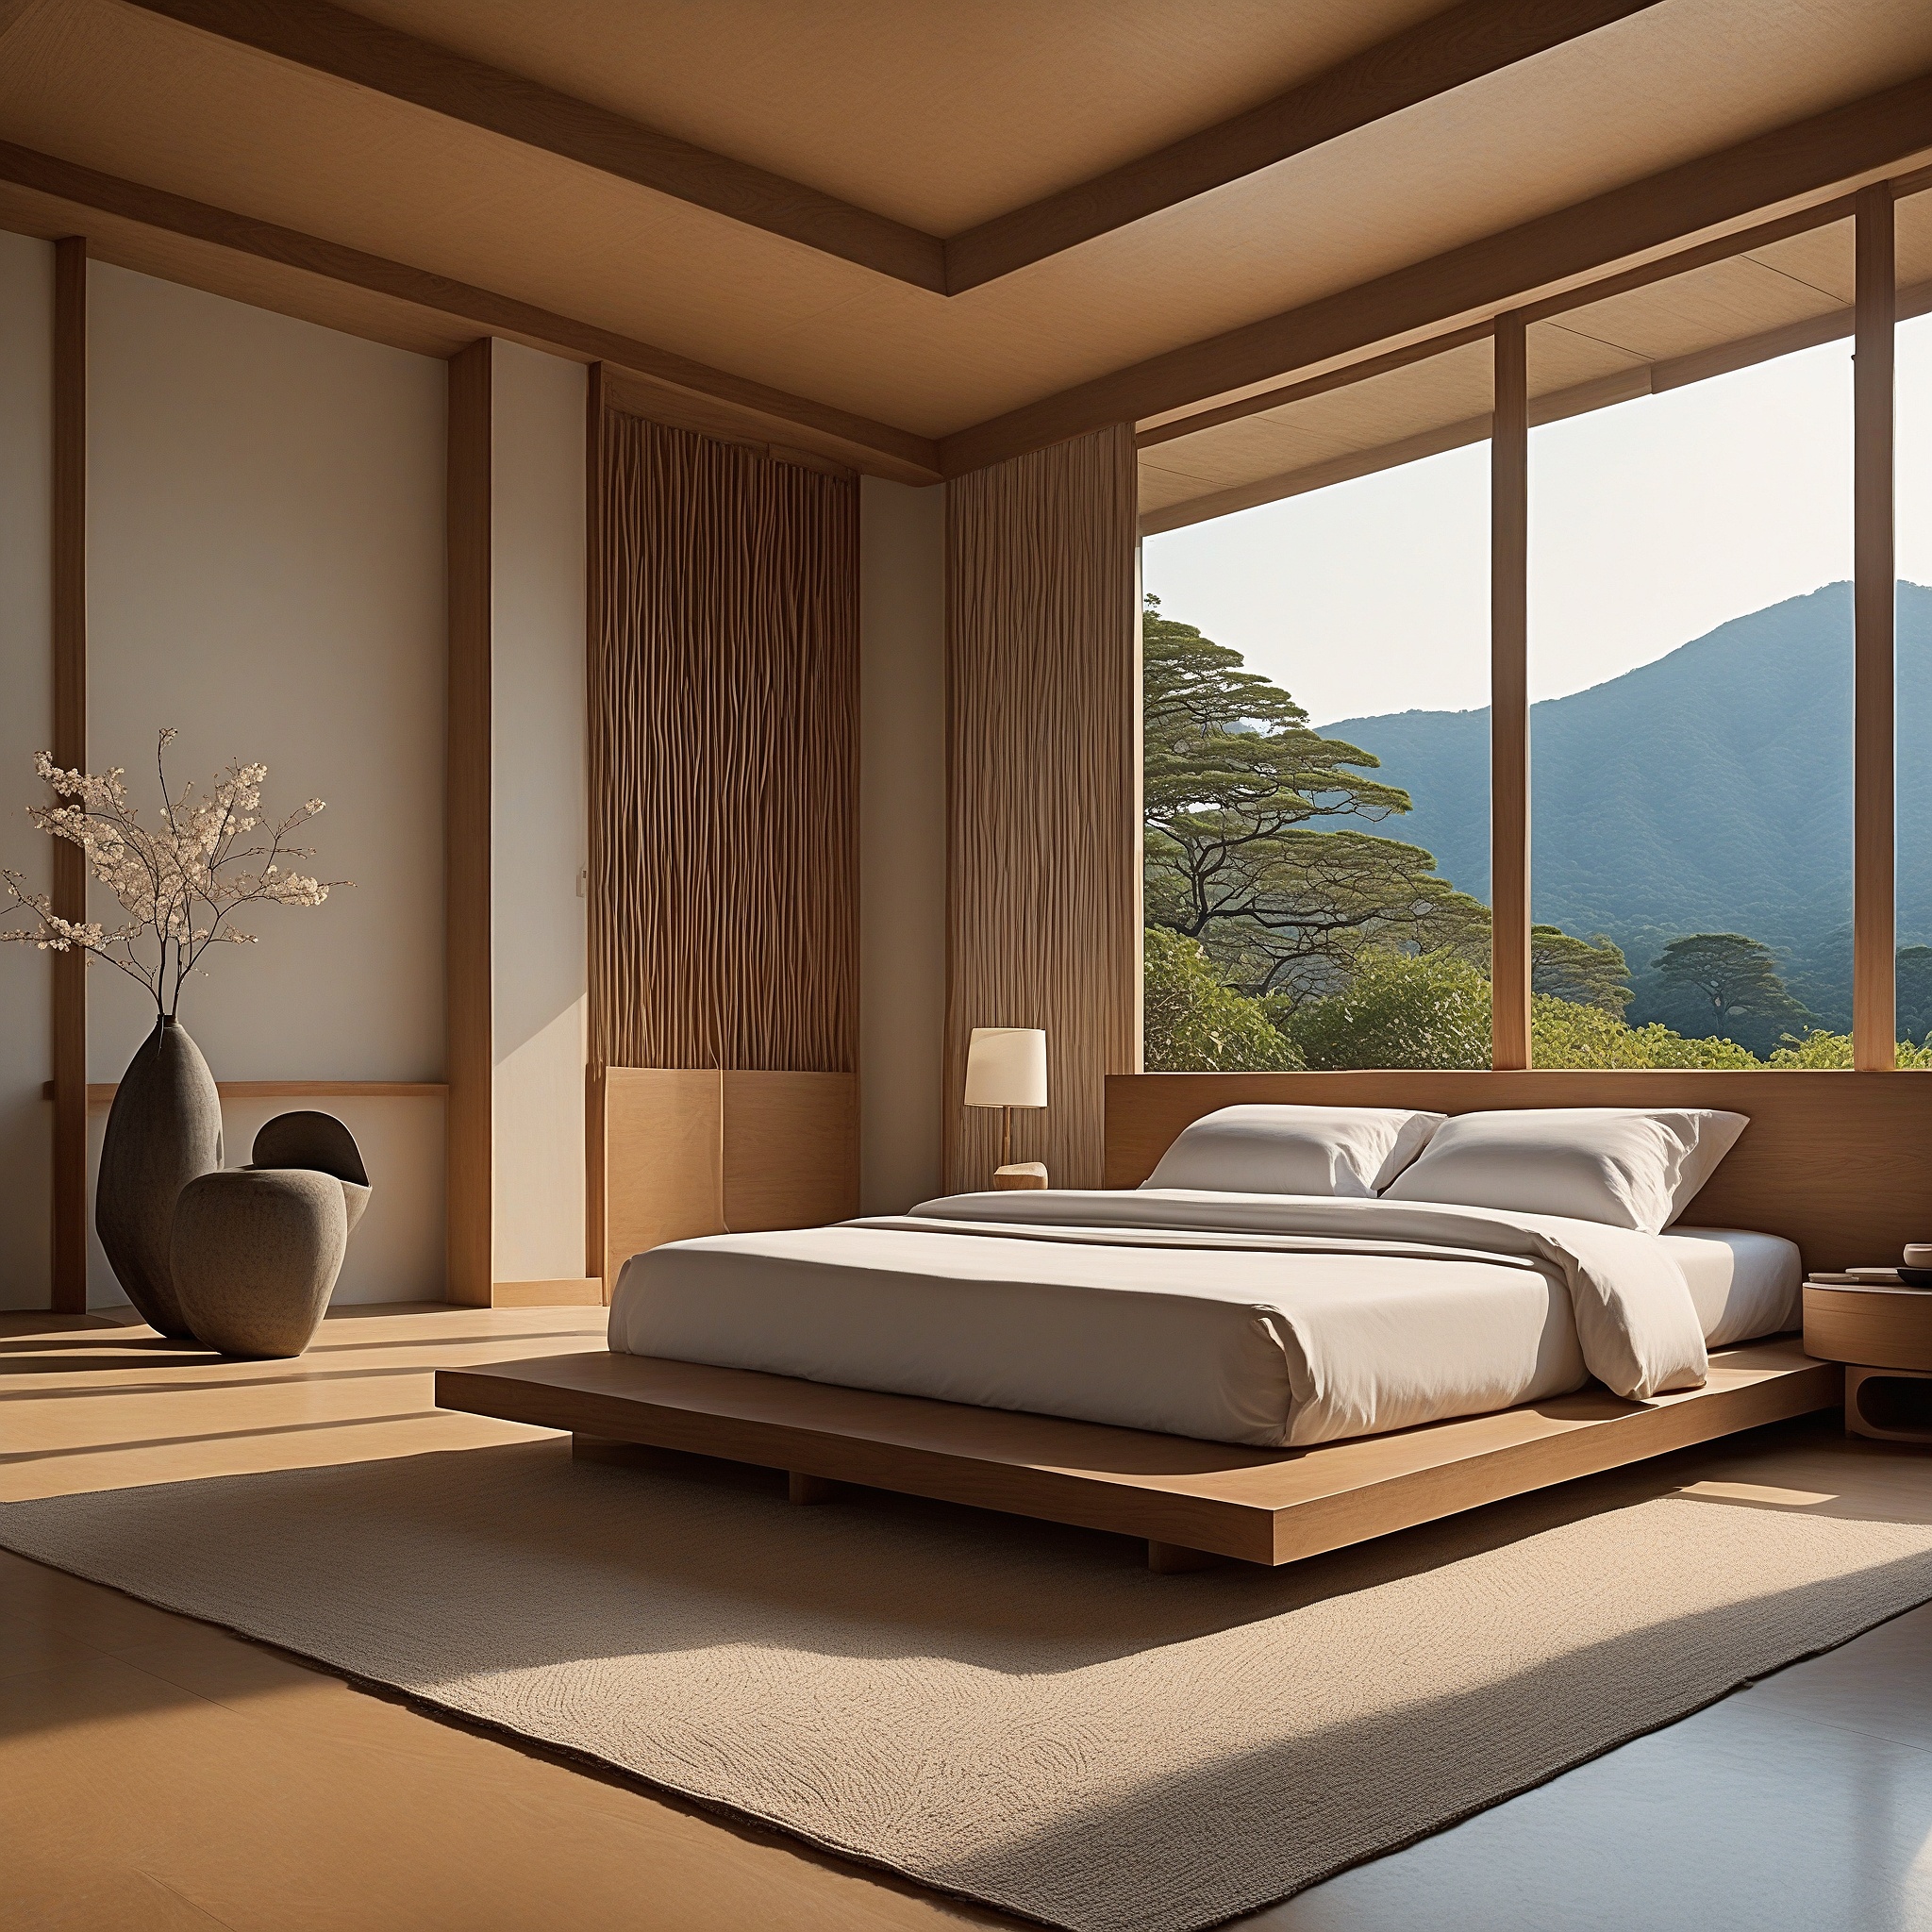 Japanese-inspired Master Bedroom with Low Platform Bed, Shoji Screens, Minimalist Furniture